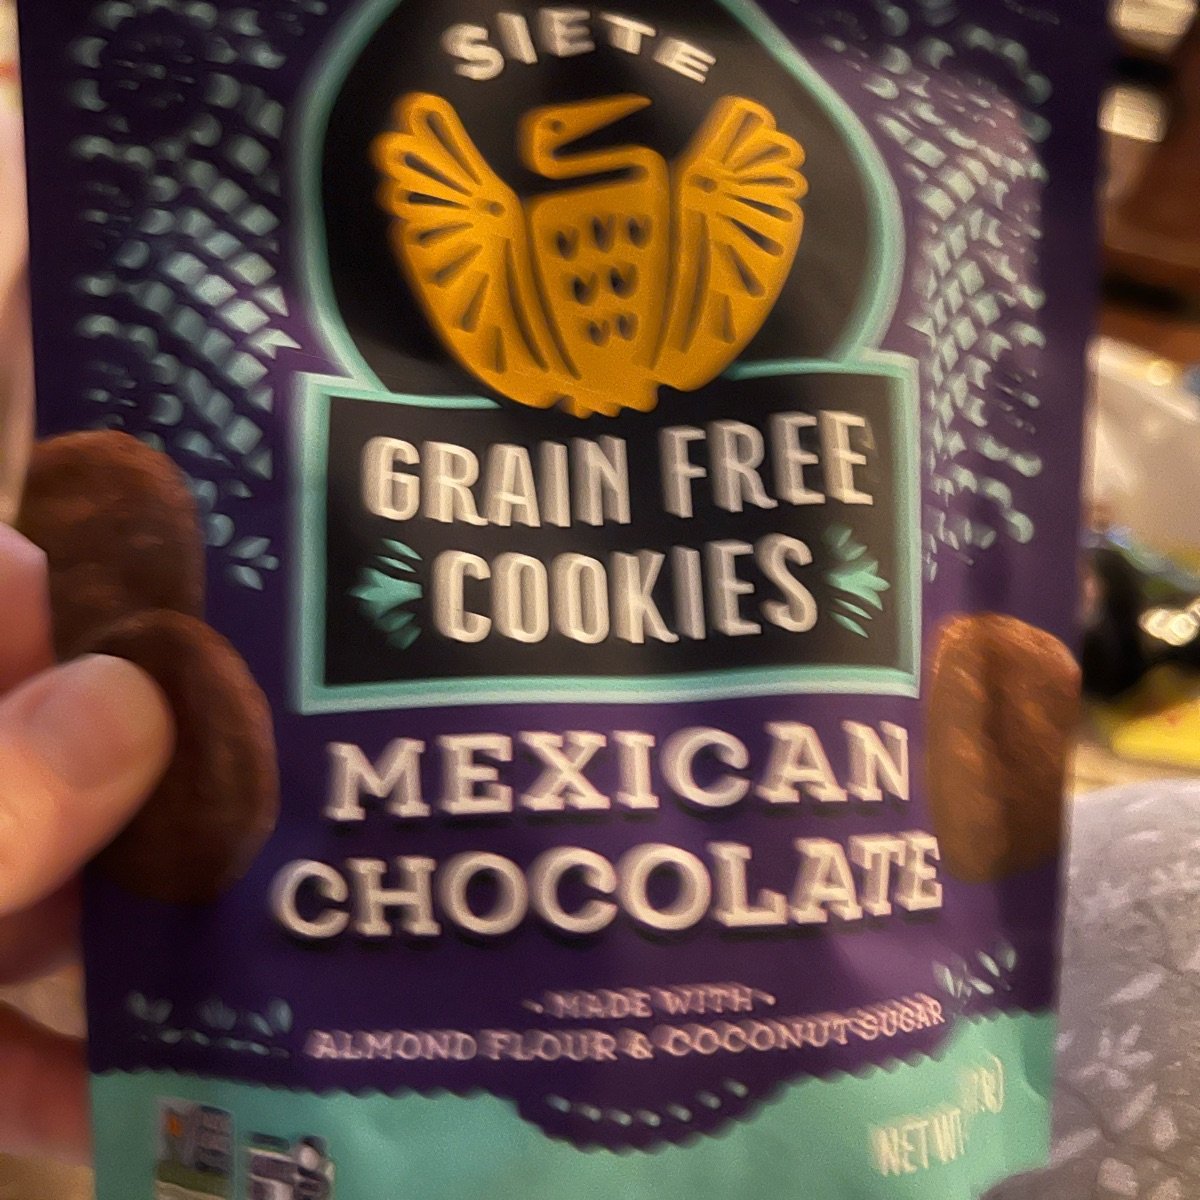 Siete Cookies, Grain Free, Mexican Chocolate